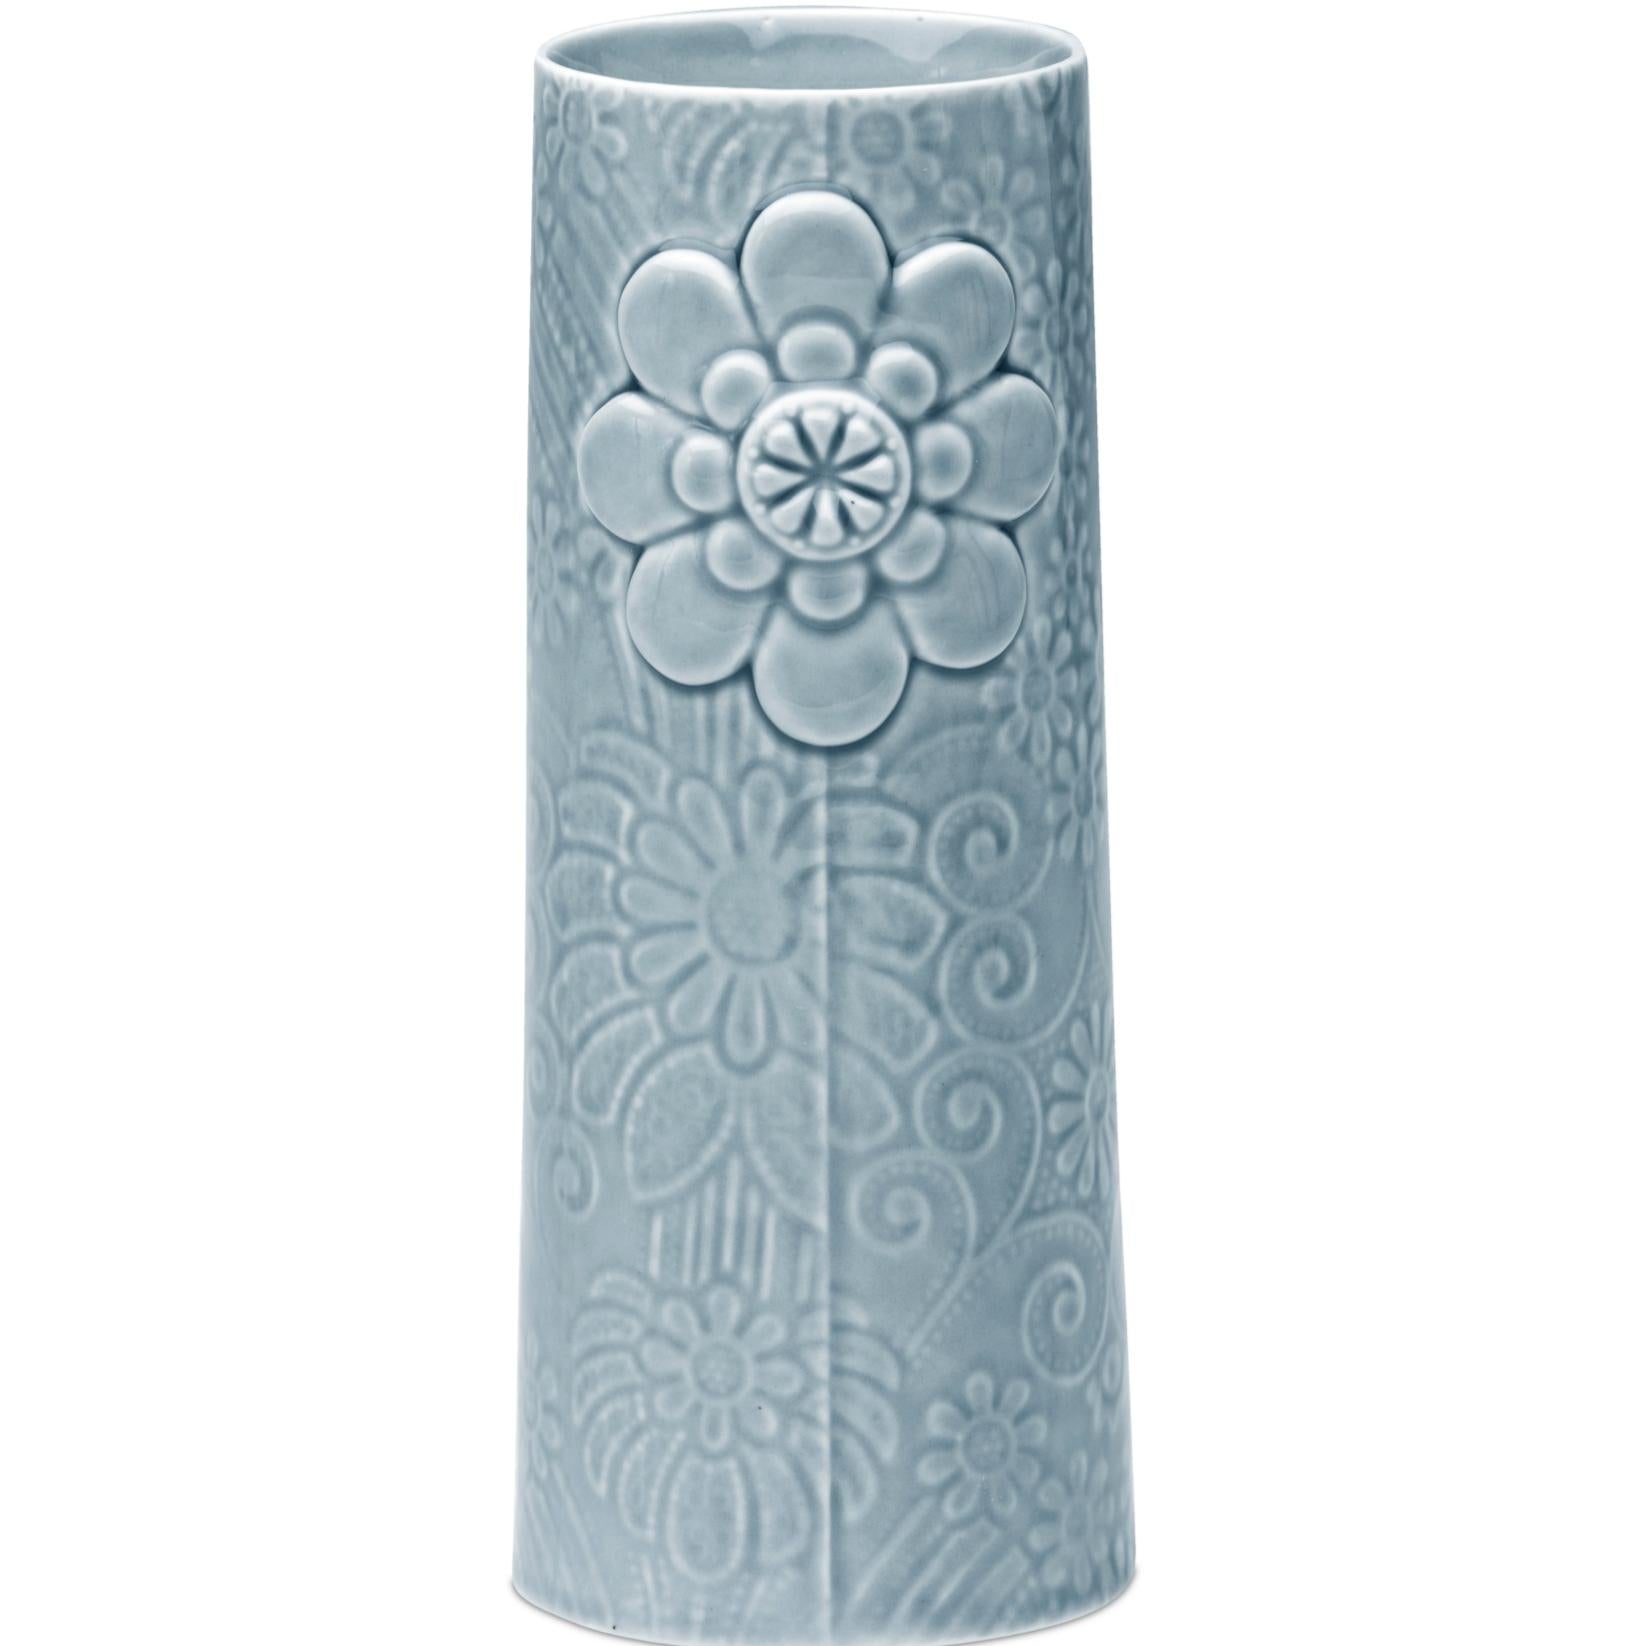 Dottir Pipanella Blume Vase Blau/Grau, 18,8 cm